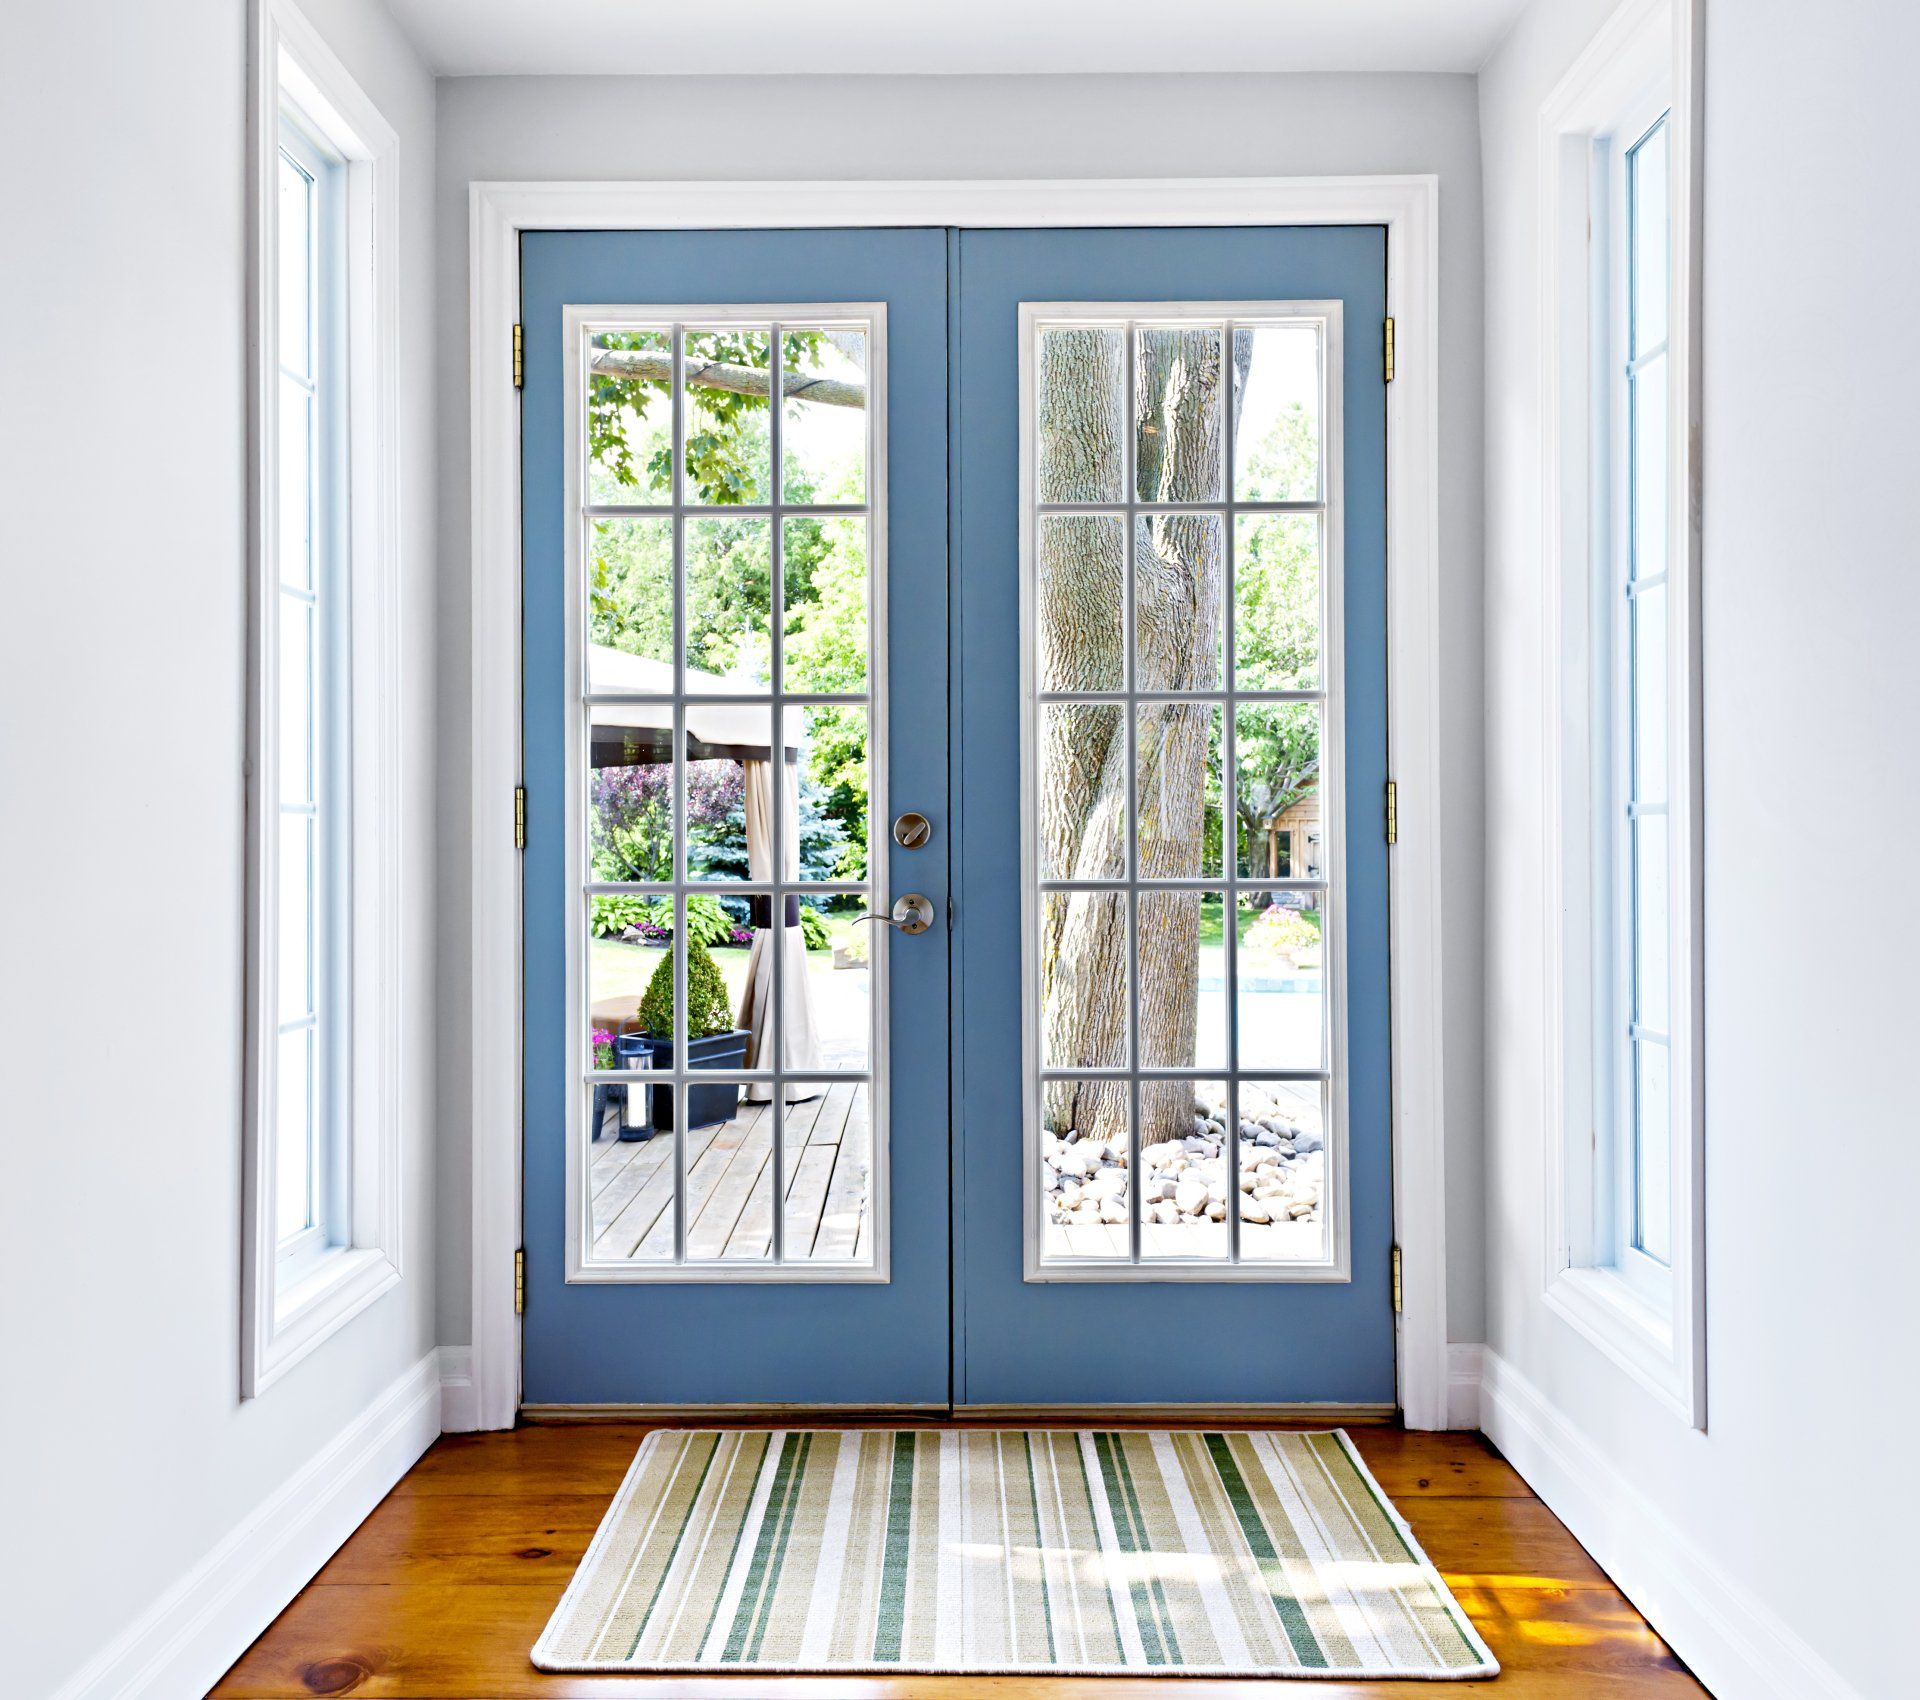 A hallway with a blue door and a rug on the floor